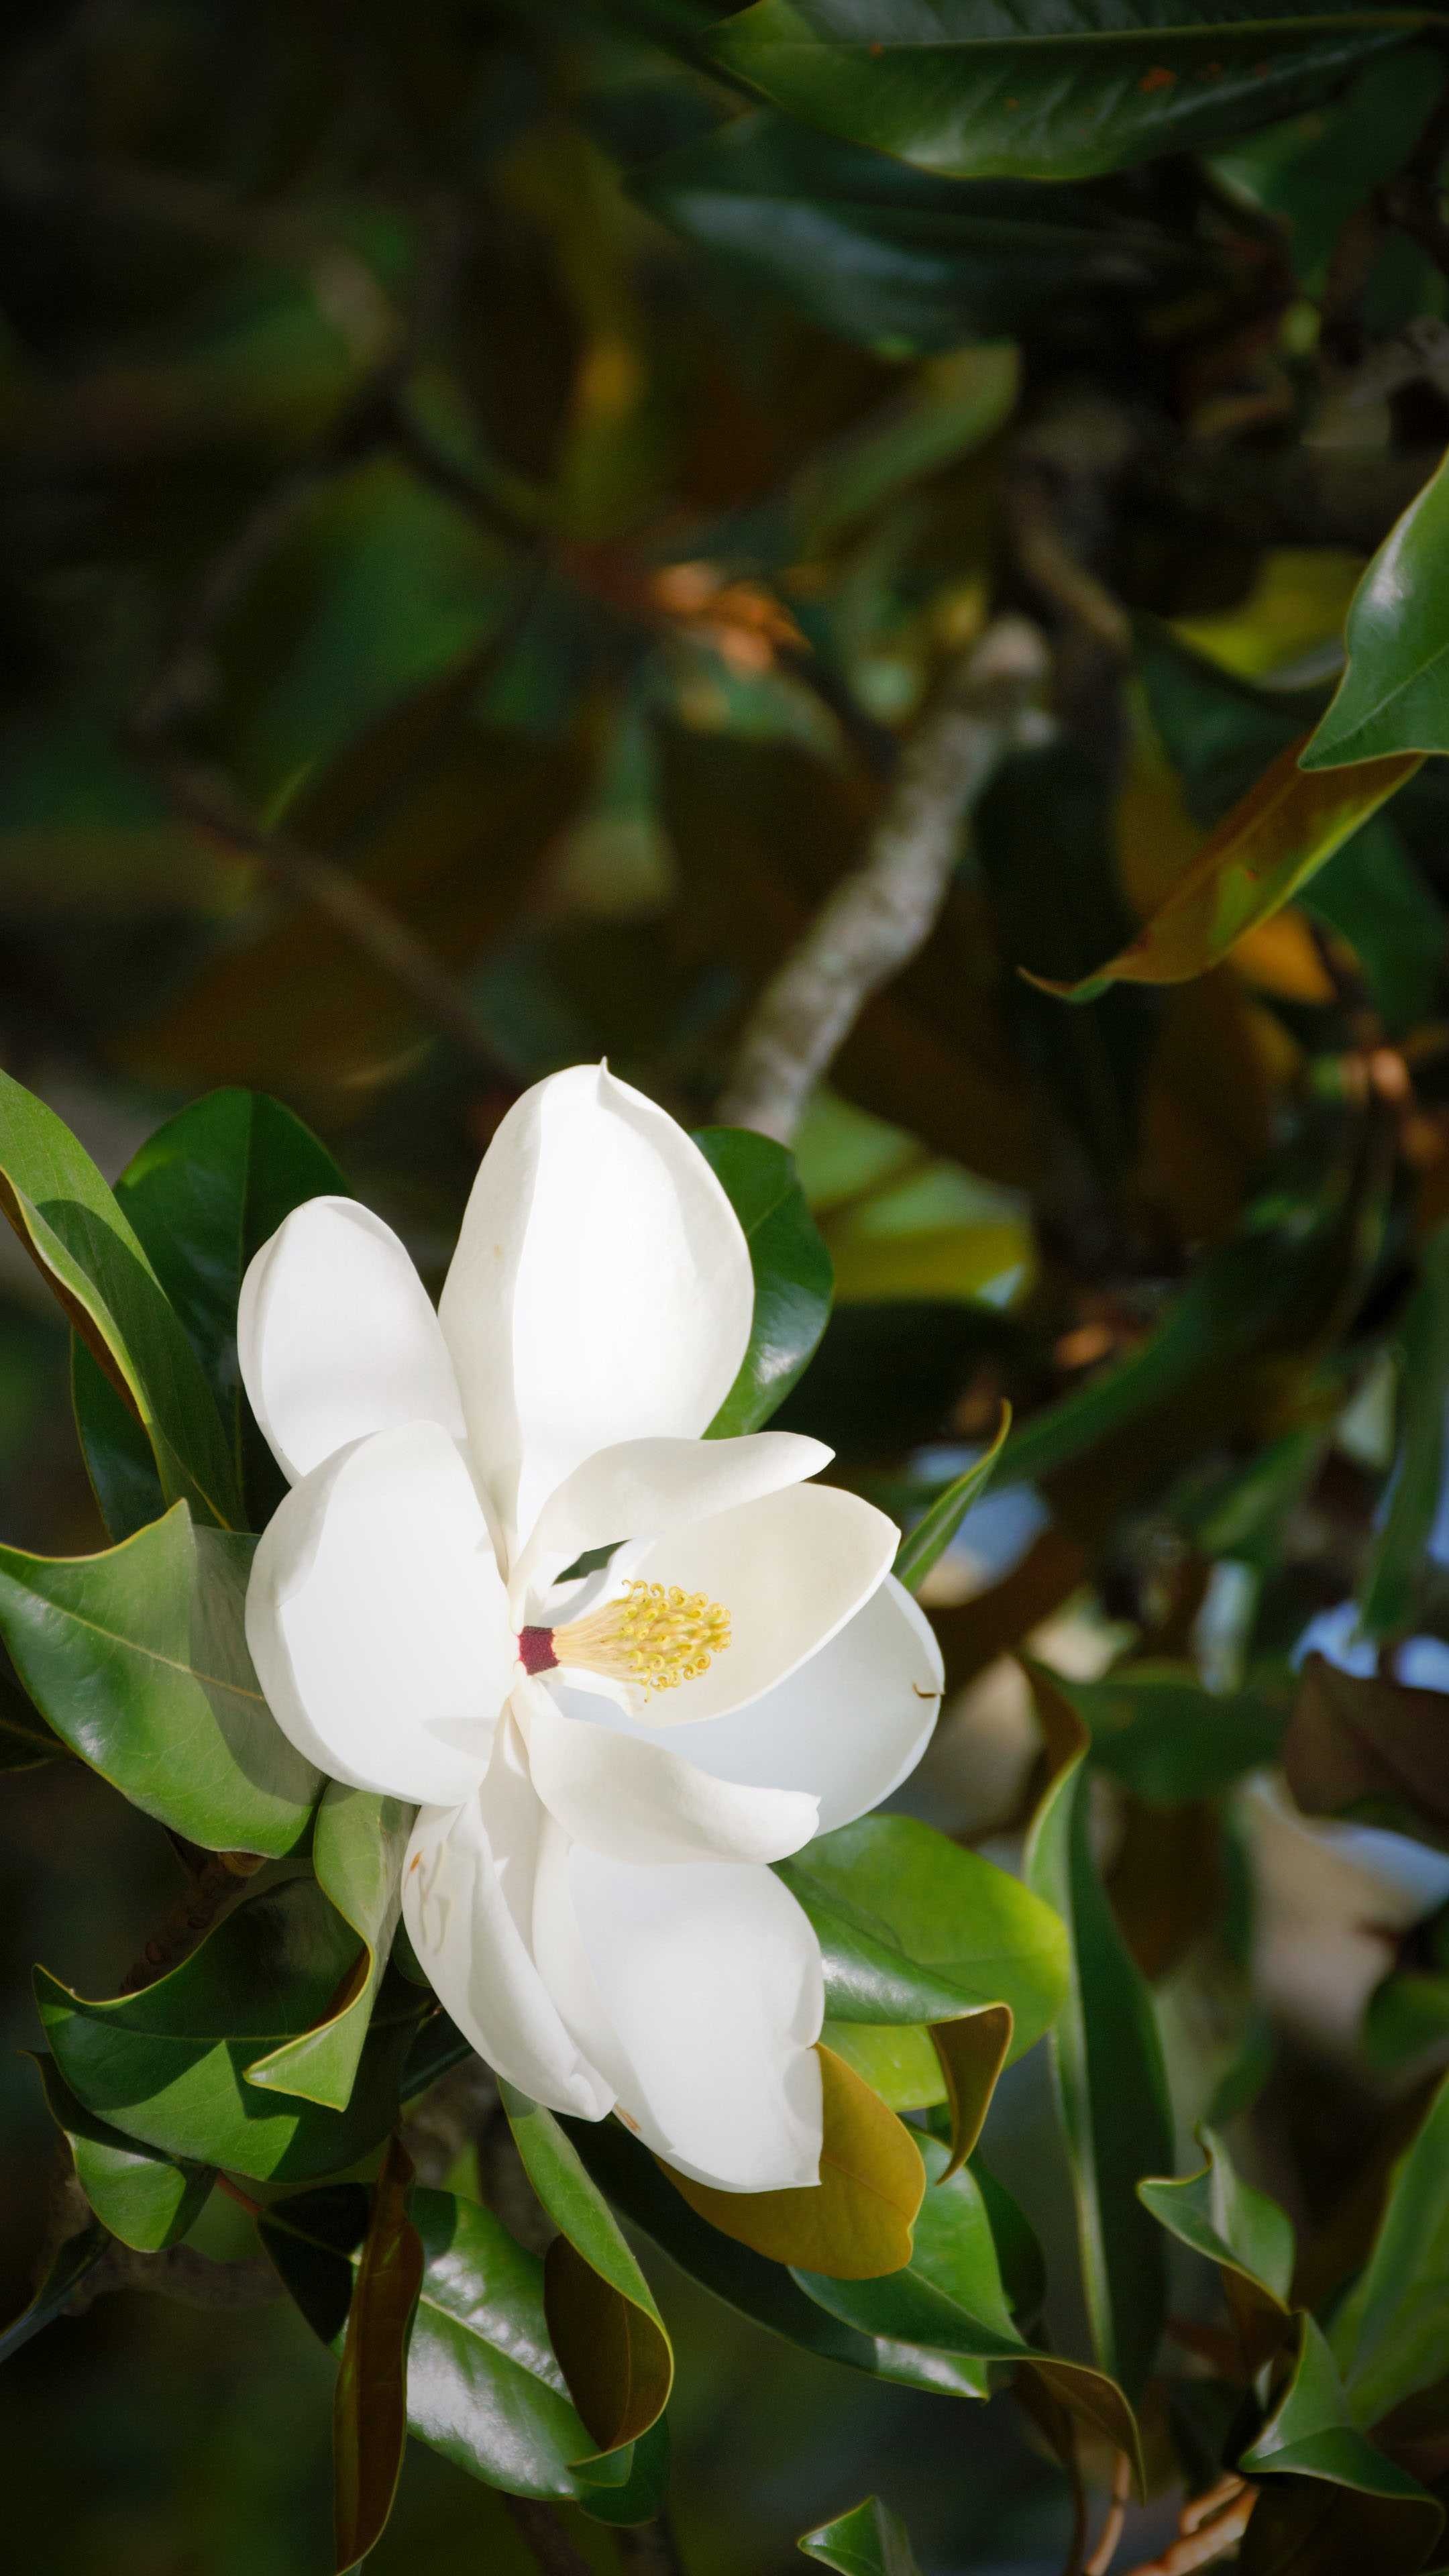 Magnolia's grace, Floral wonderland, Nature's artwork, Beautiful flowers, 2160x3840 4K Handy